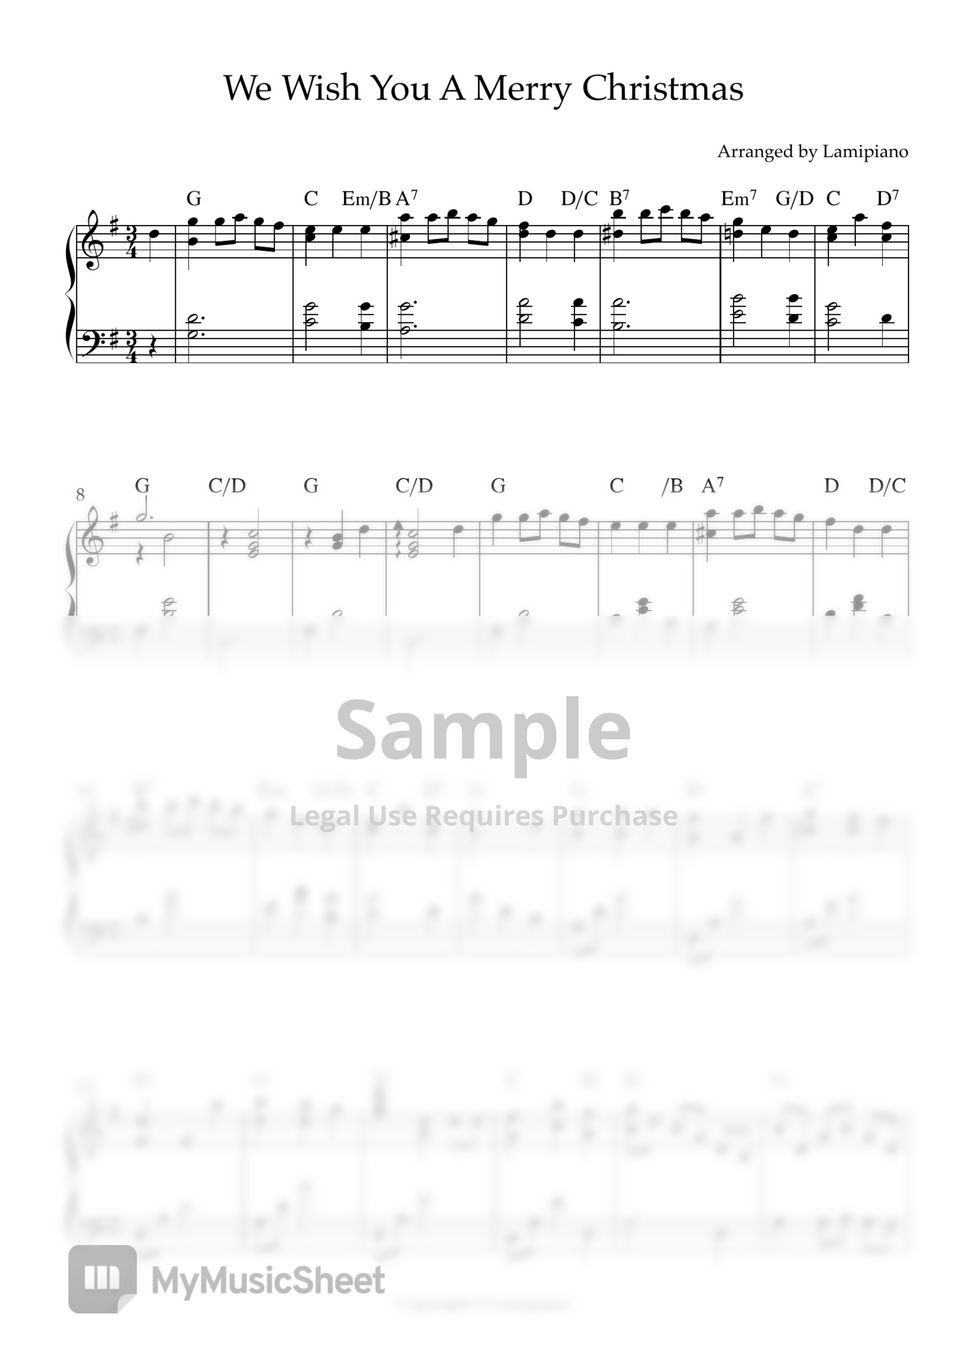 Carol - We Wish You a Merry Christmas (Christmas Song/Carol/Piano solo) by Lamipiano